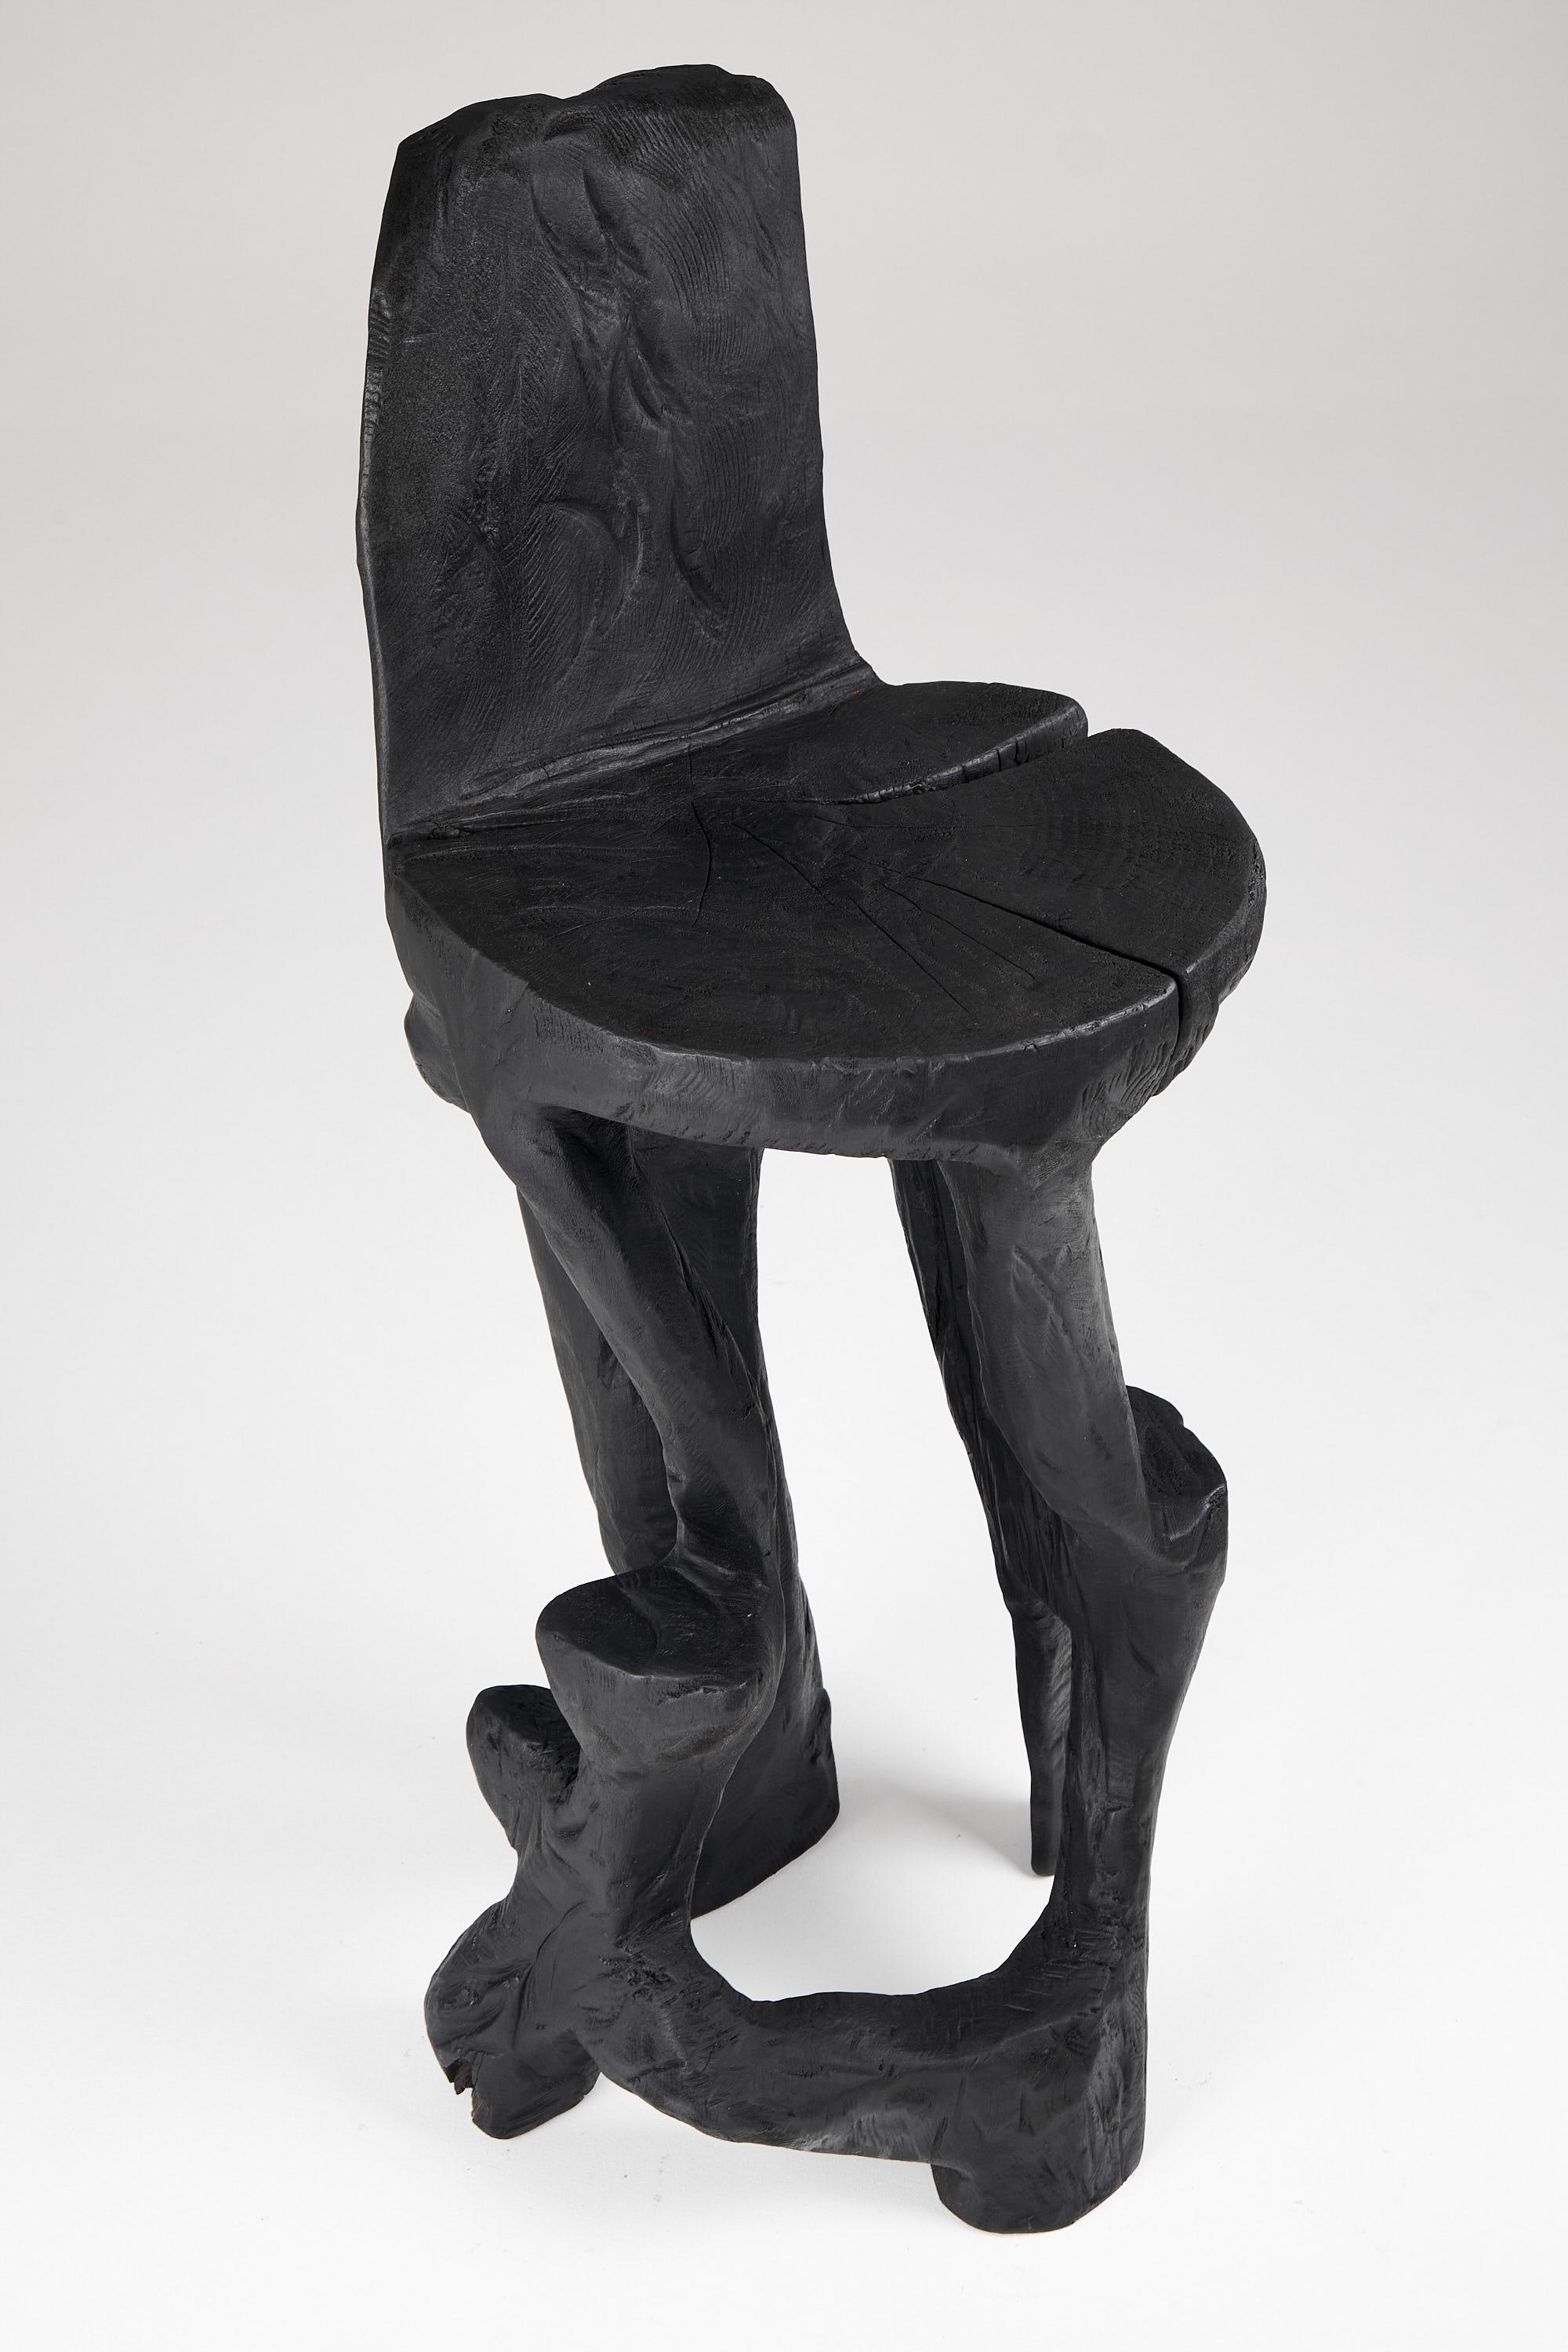 Makha, Solid Wood Sculptural Bar Chair, Original Contemporary Design, Logniture For Sale 5